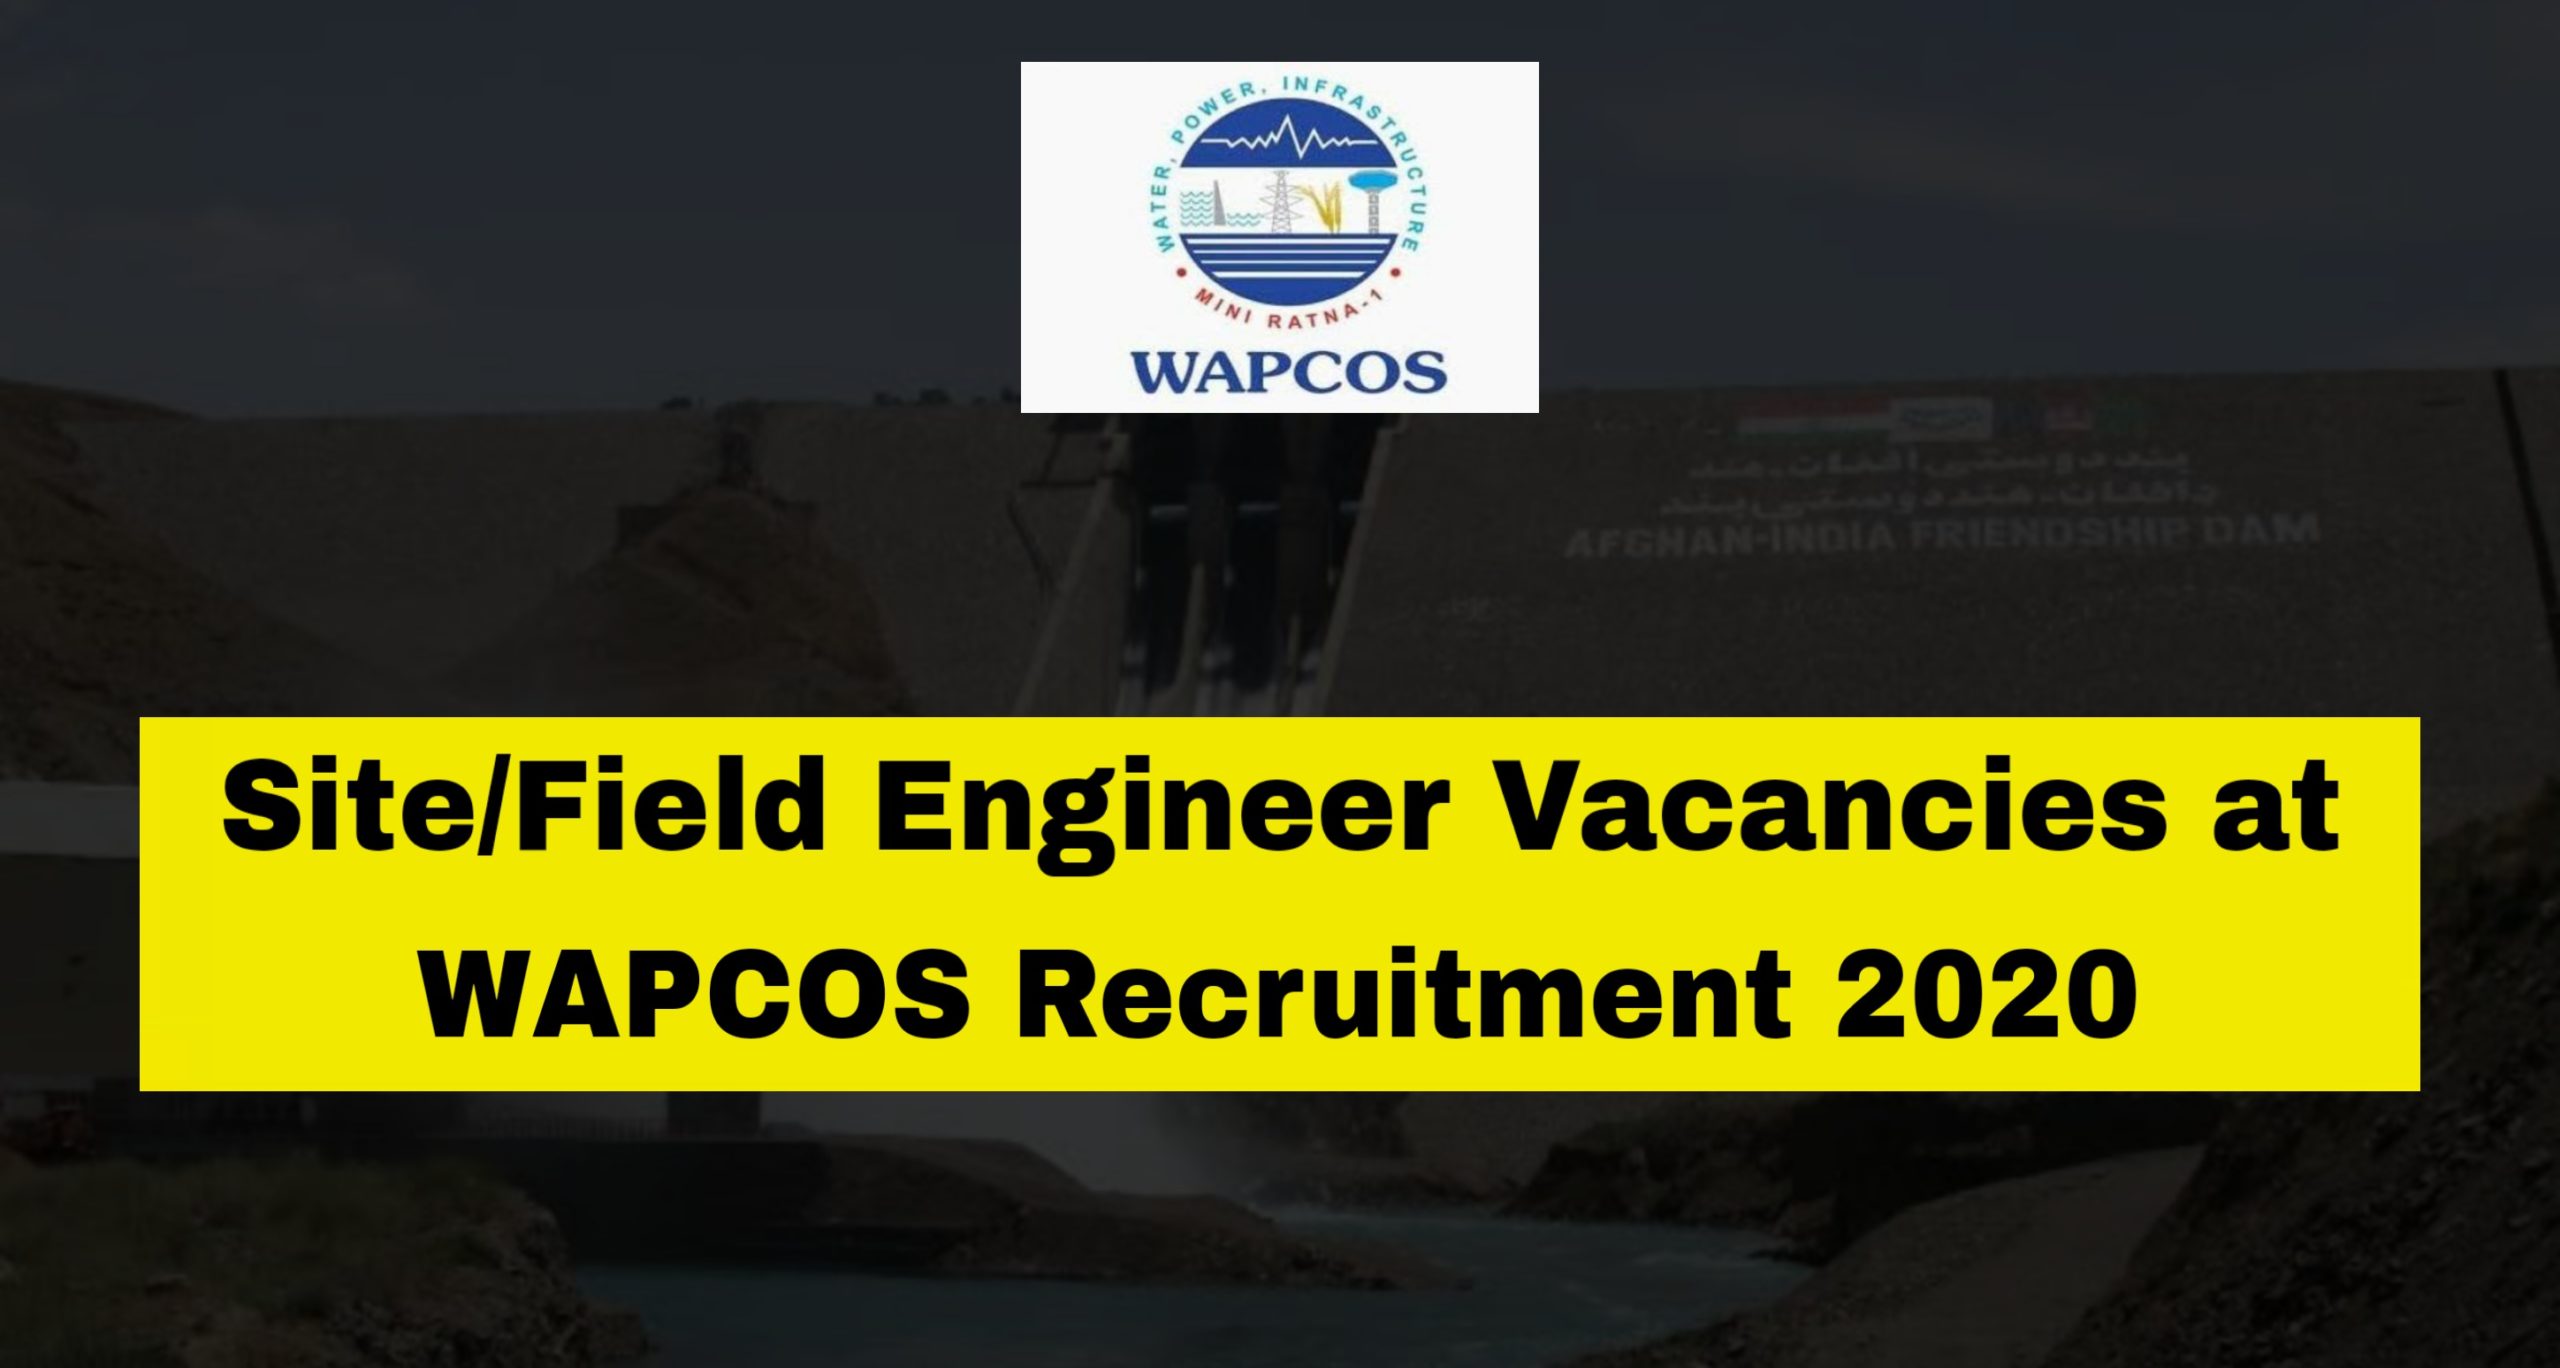 Field Engineer/ Site Engineer job vacancies in WAPCOS Limited